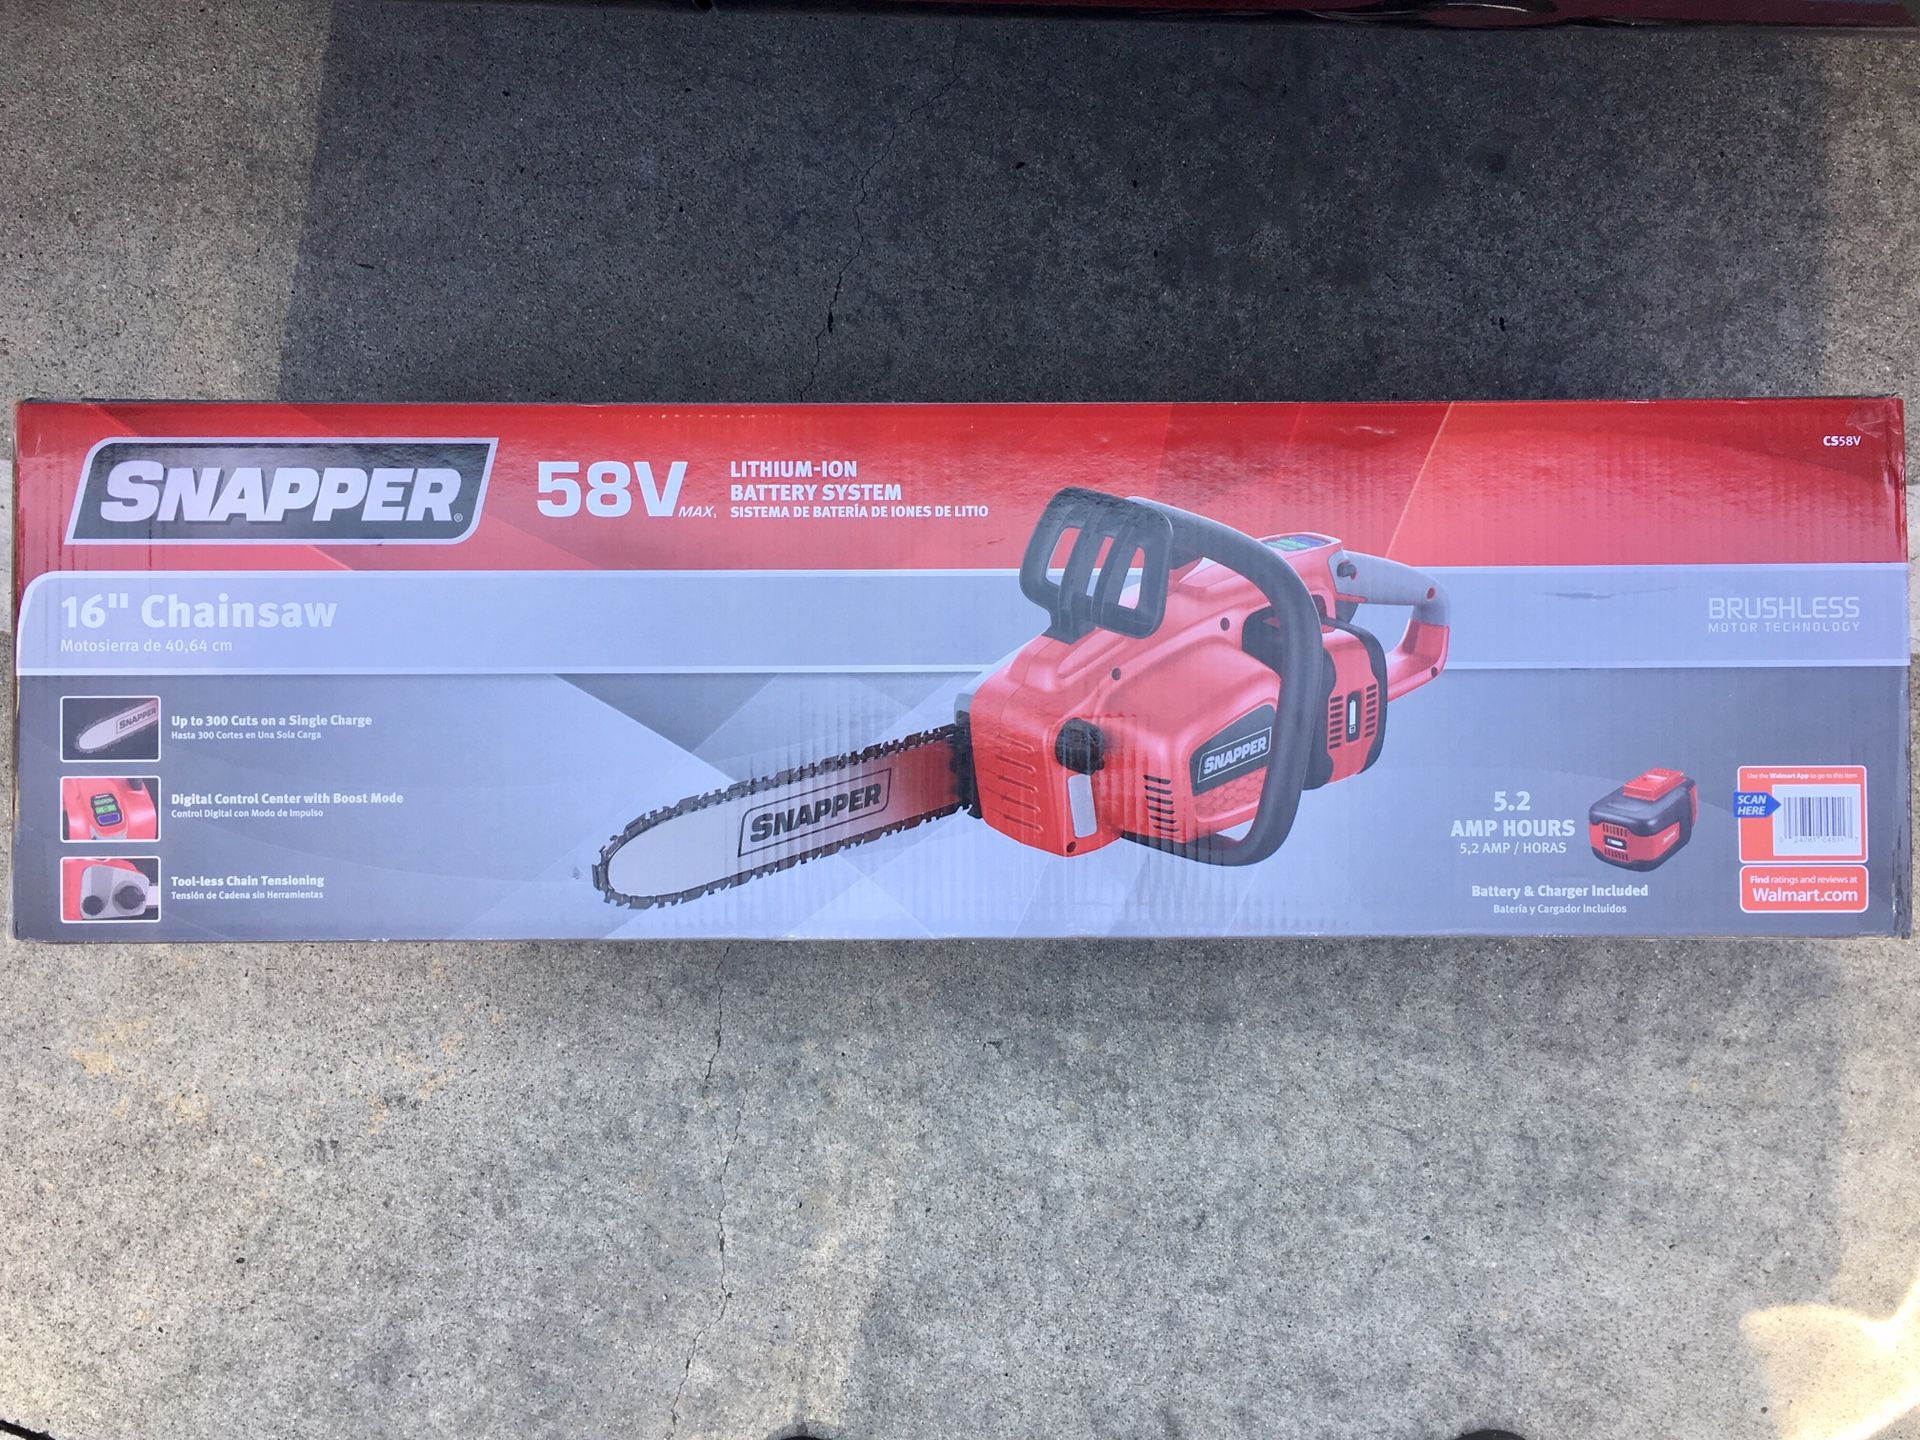 Snapper 58V cordless chainsaw